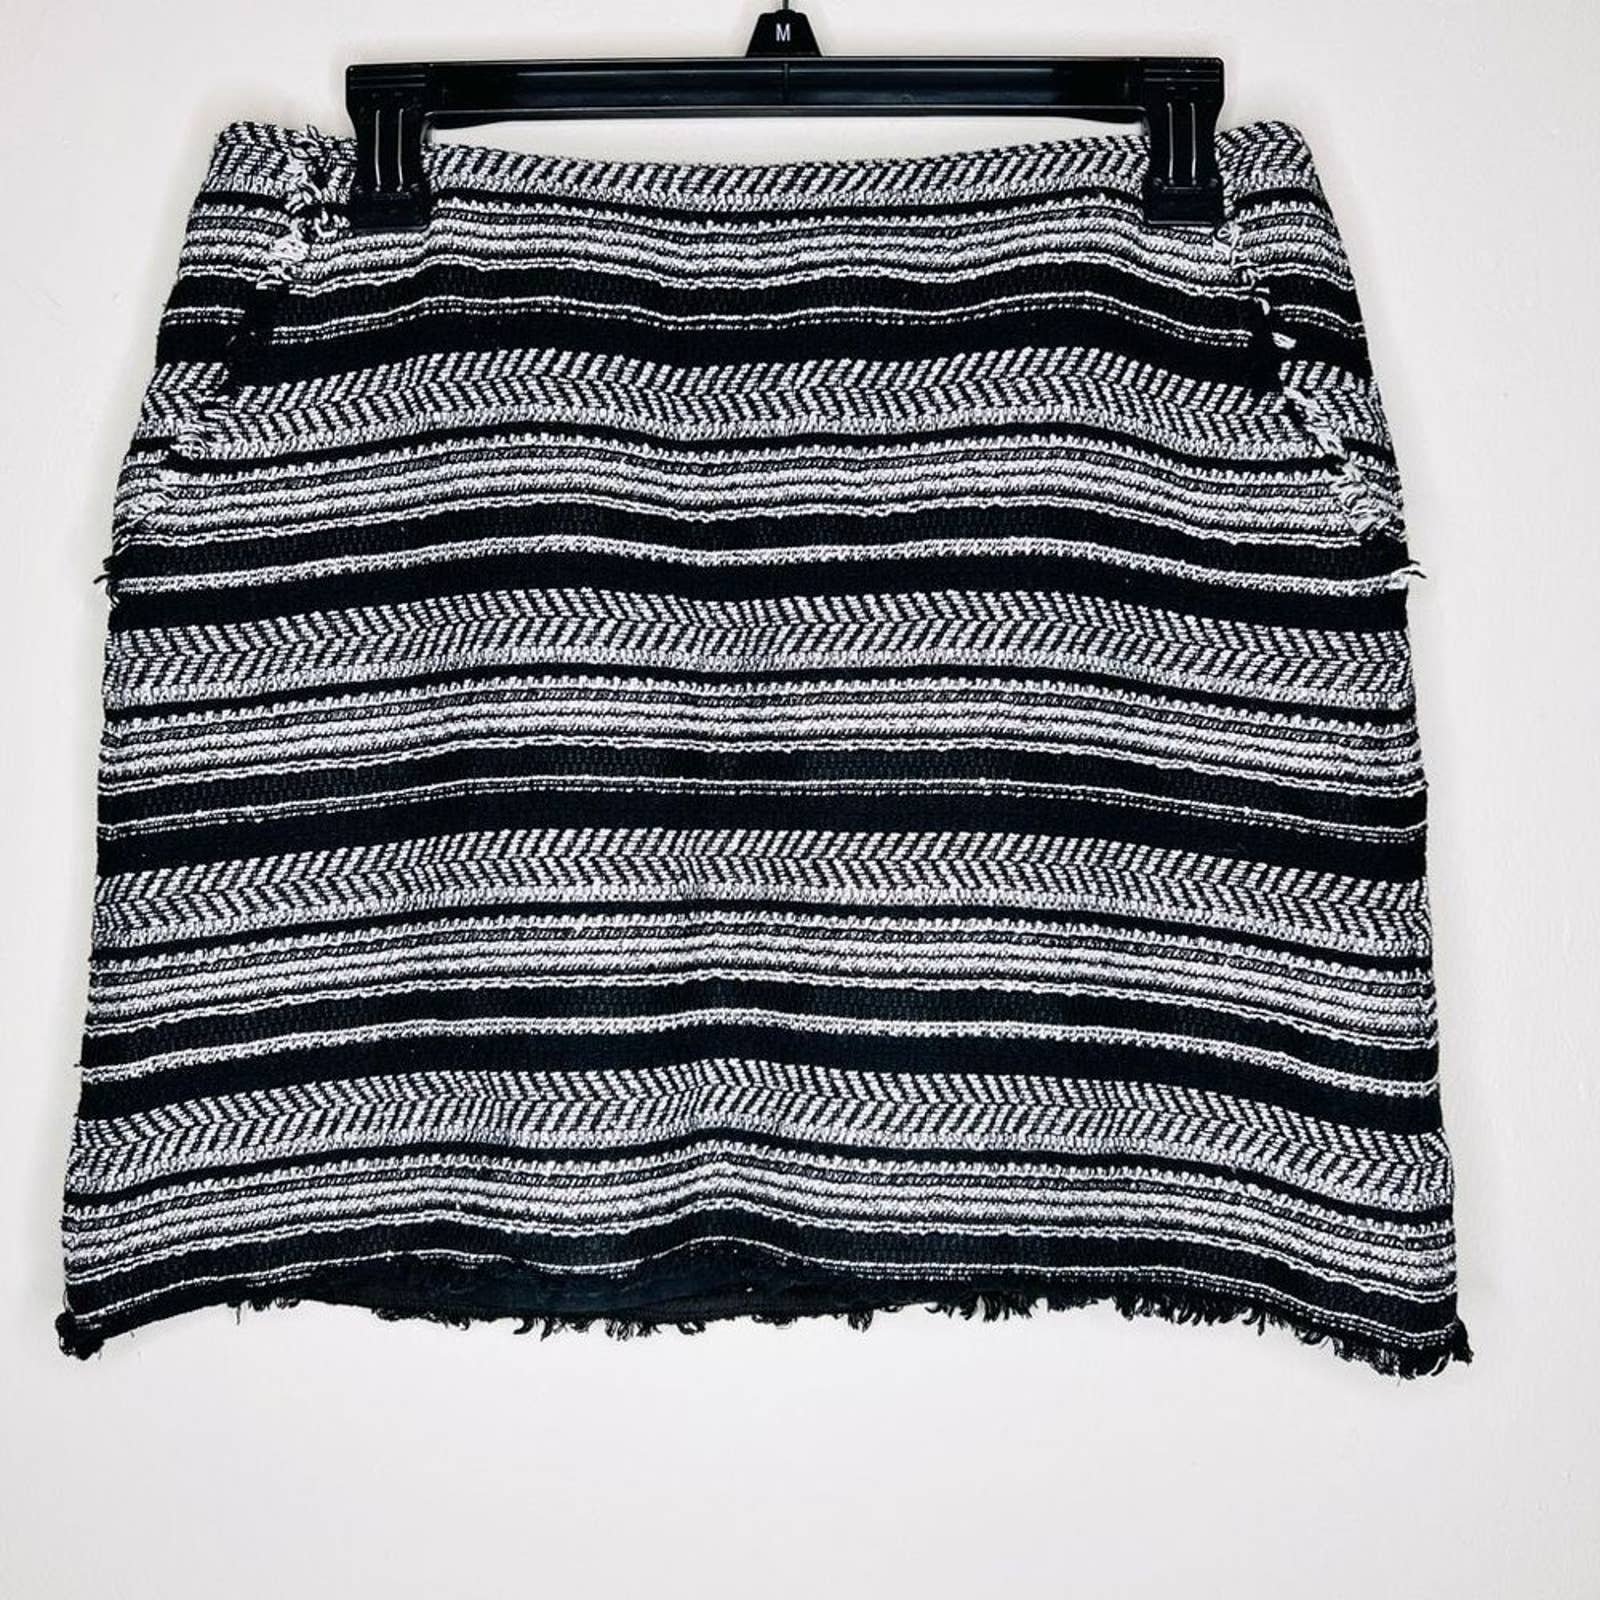 Elegant Ann Taylor LOFT Skirt w Pockets 6 Black & White Tweed Knit A-Line Mini Fringe MPSHTjKNy High Quaity